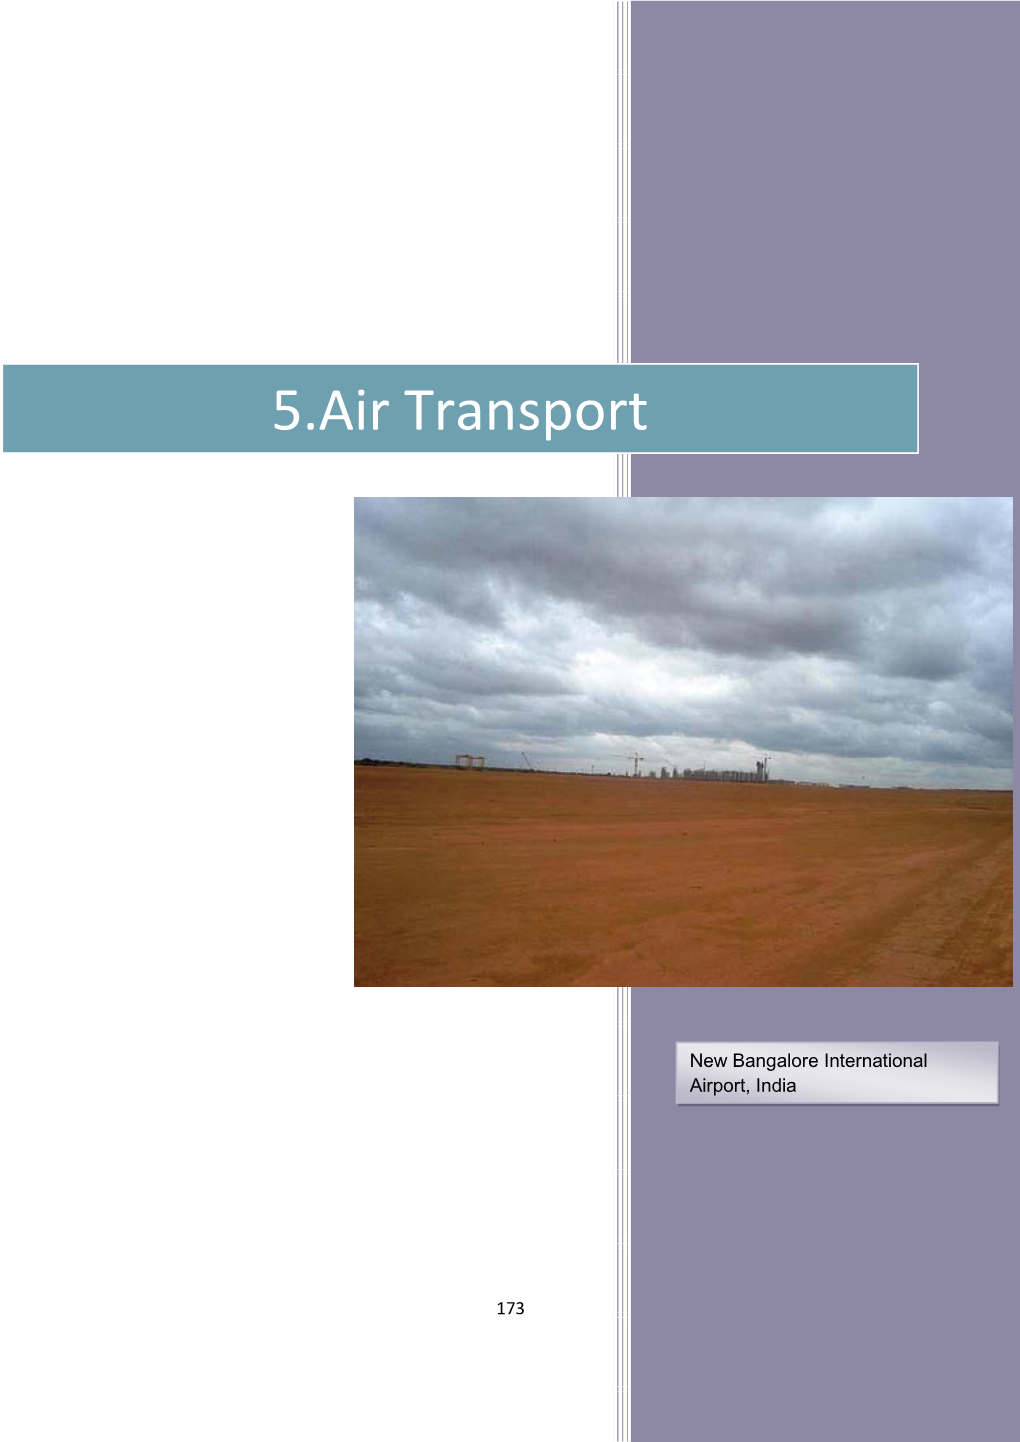 5.Air Transport